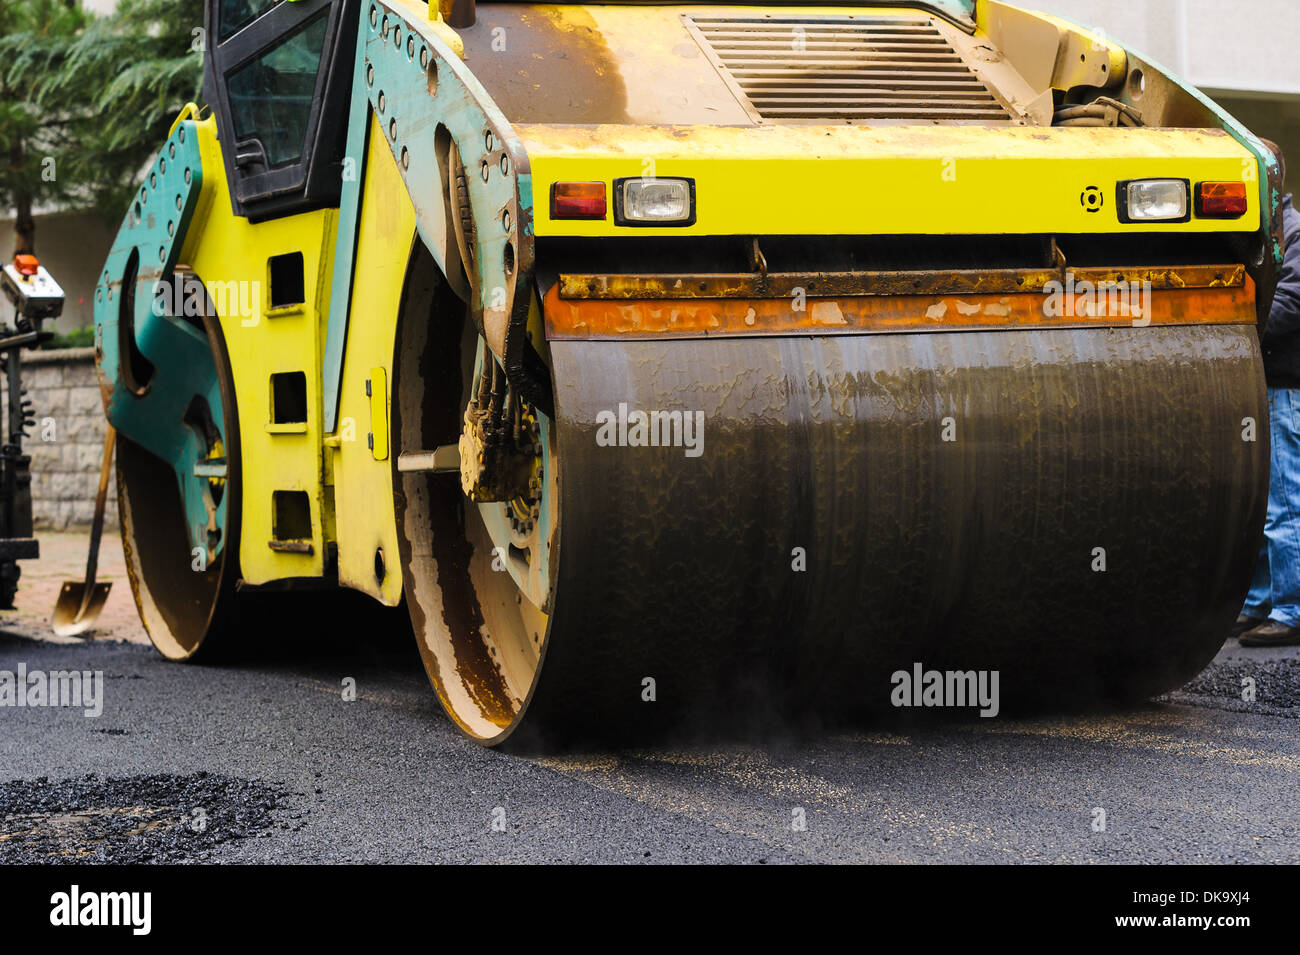 steamroller big size flatten out the asphalt Stock Photo